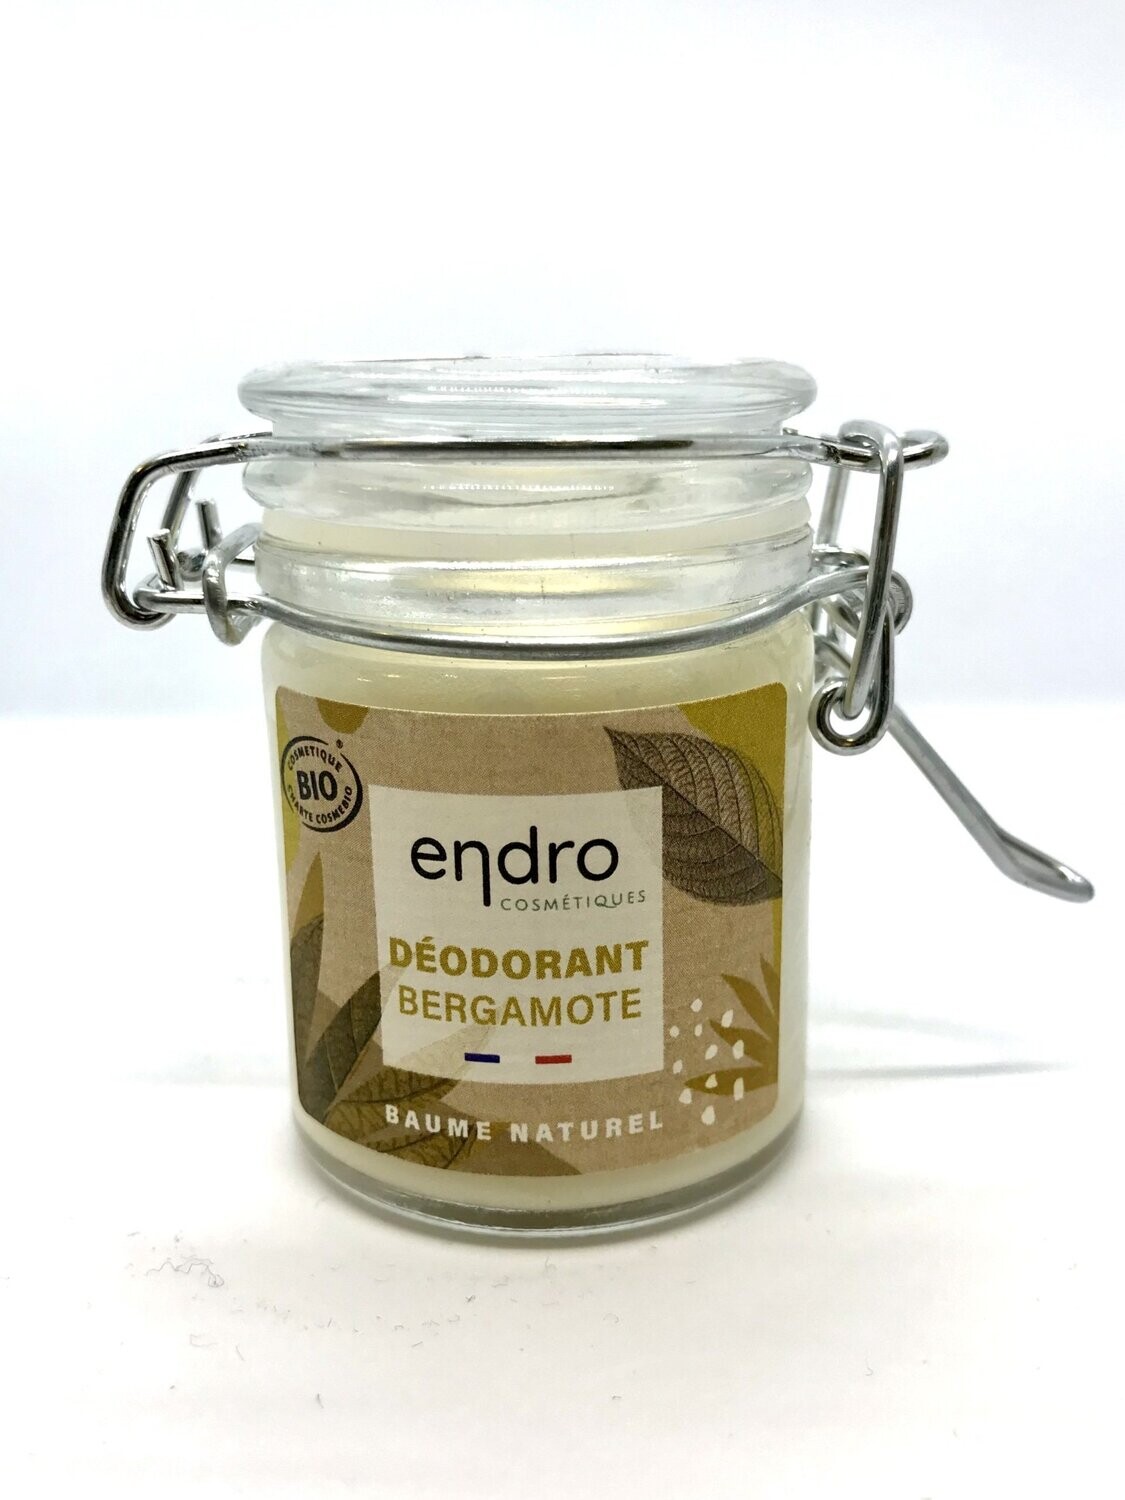 Déodorant Endro
Bergamote